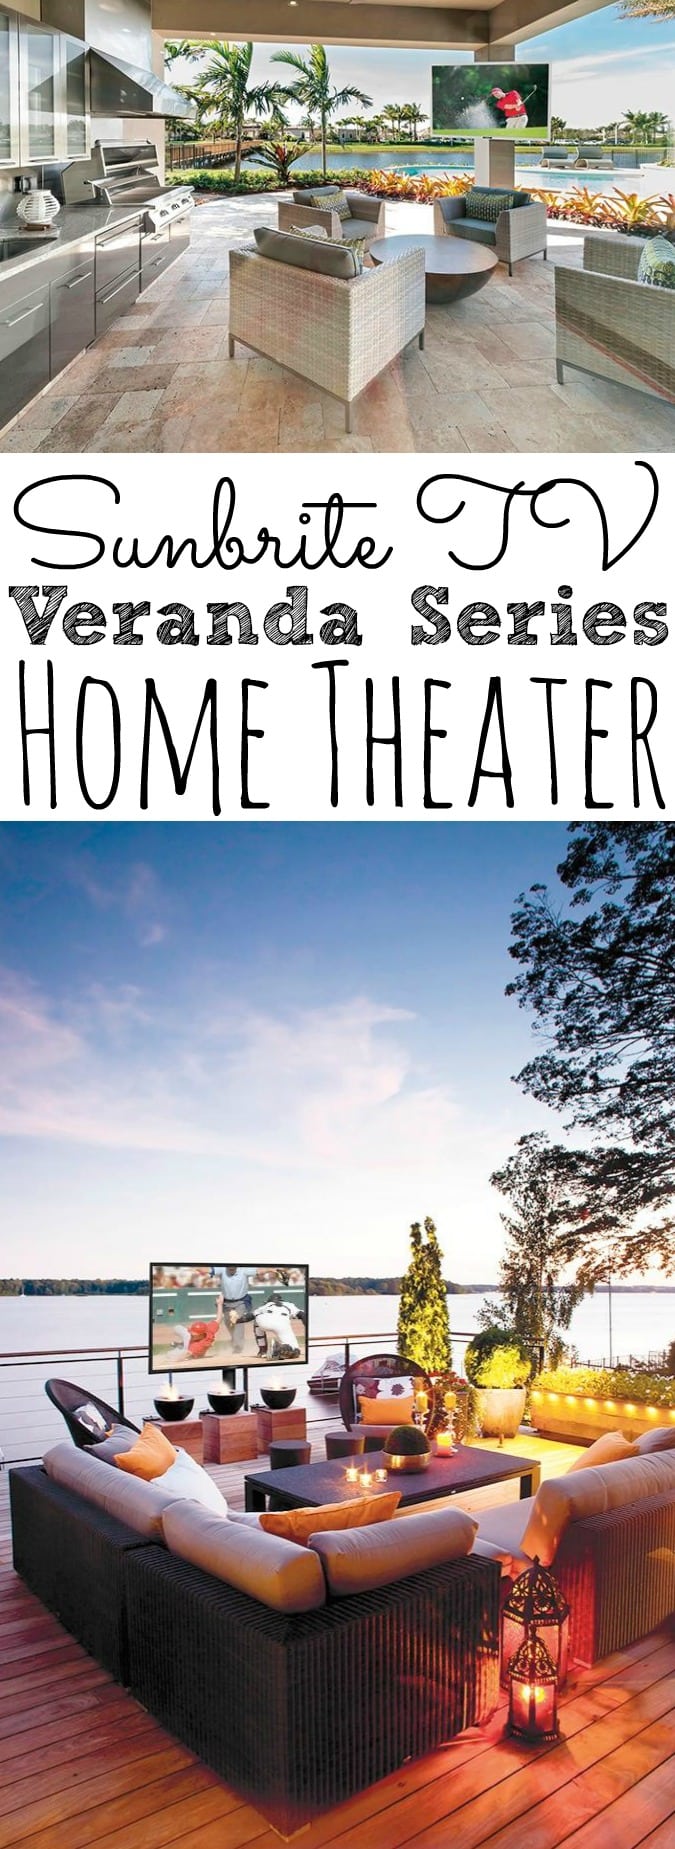 Sunbrite TV Veranda Series Home Theater - simplytodaylife.com